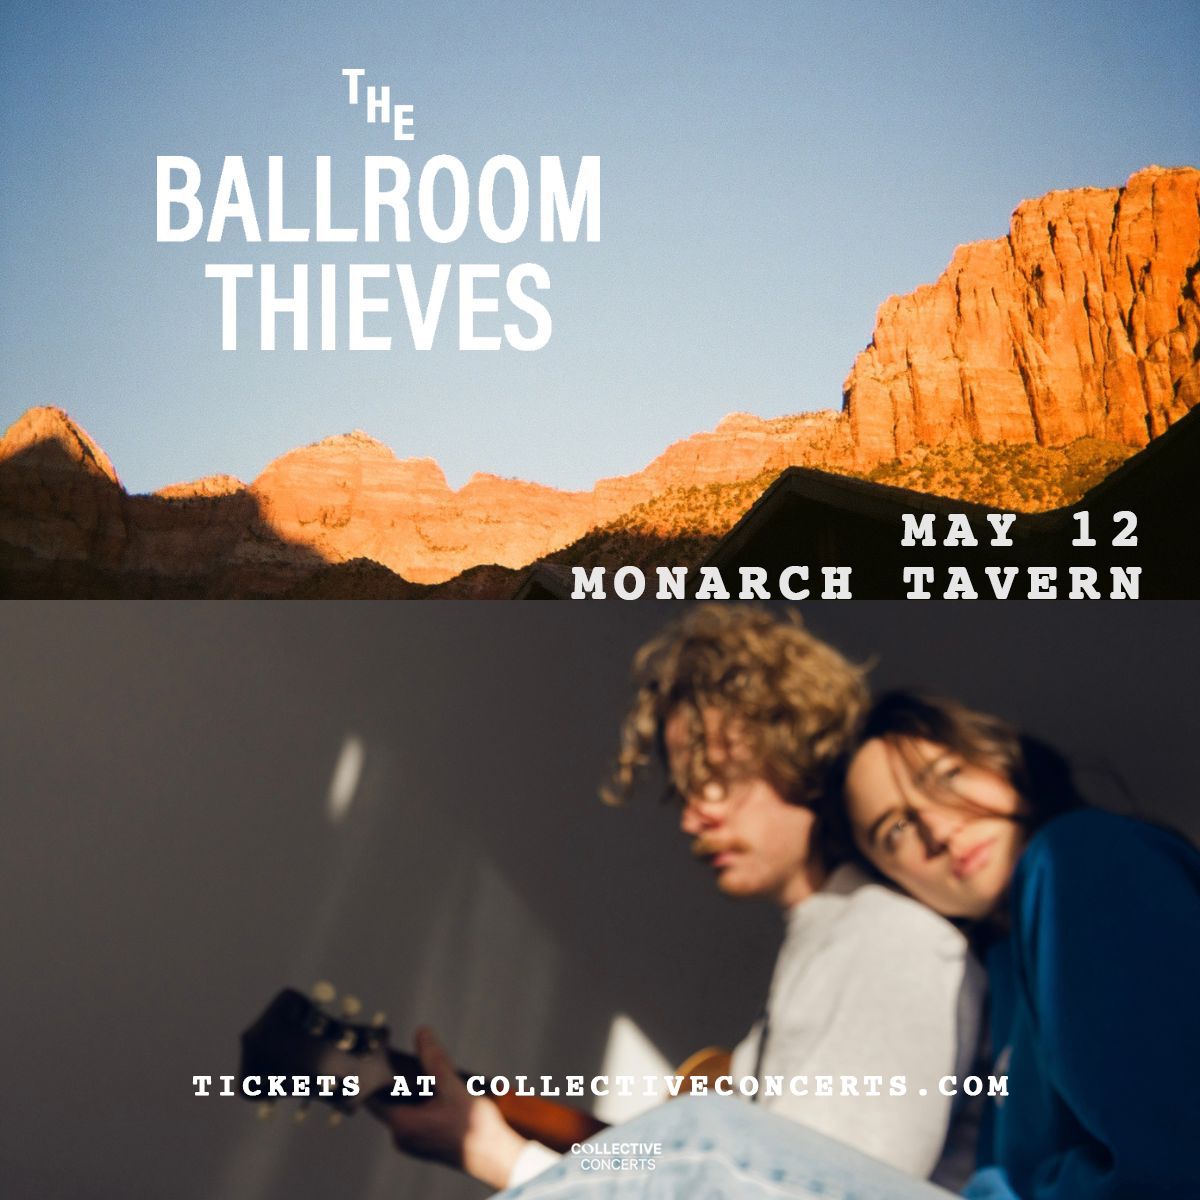 The Ballroom Thieves at Monarch Tavern